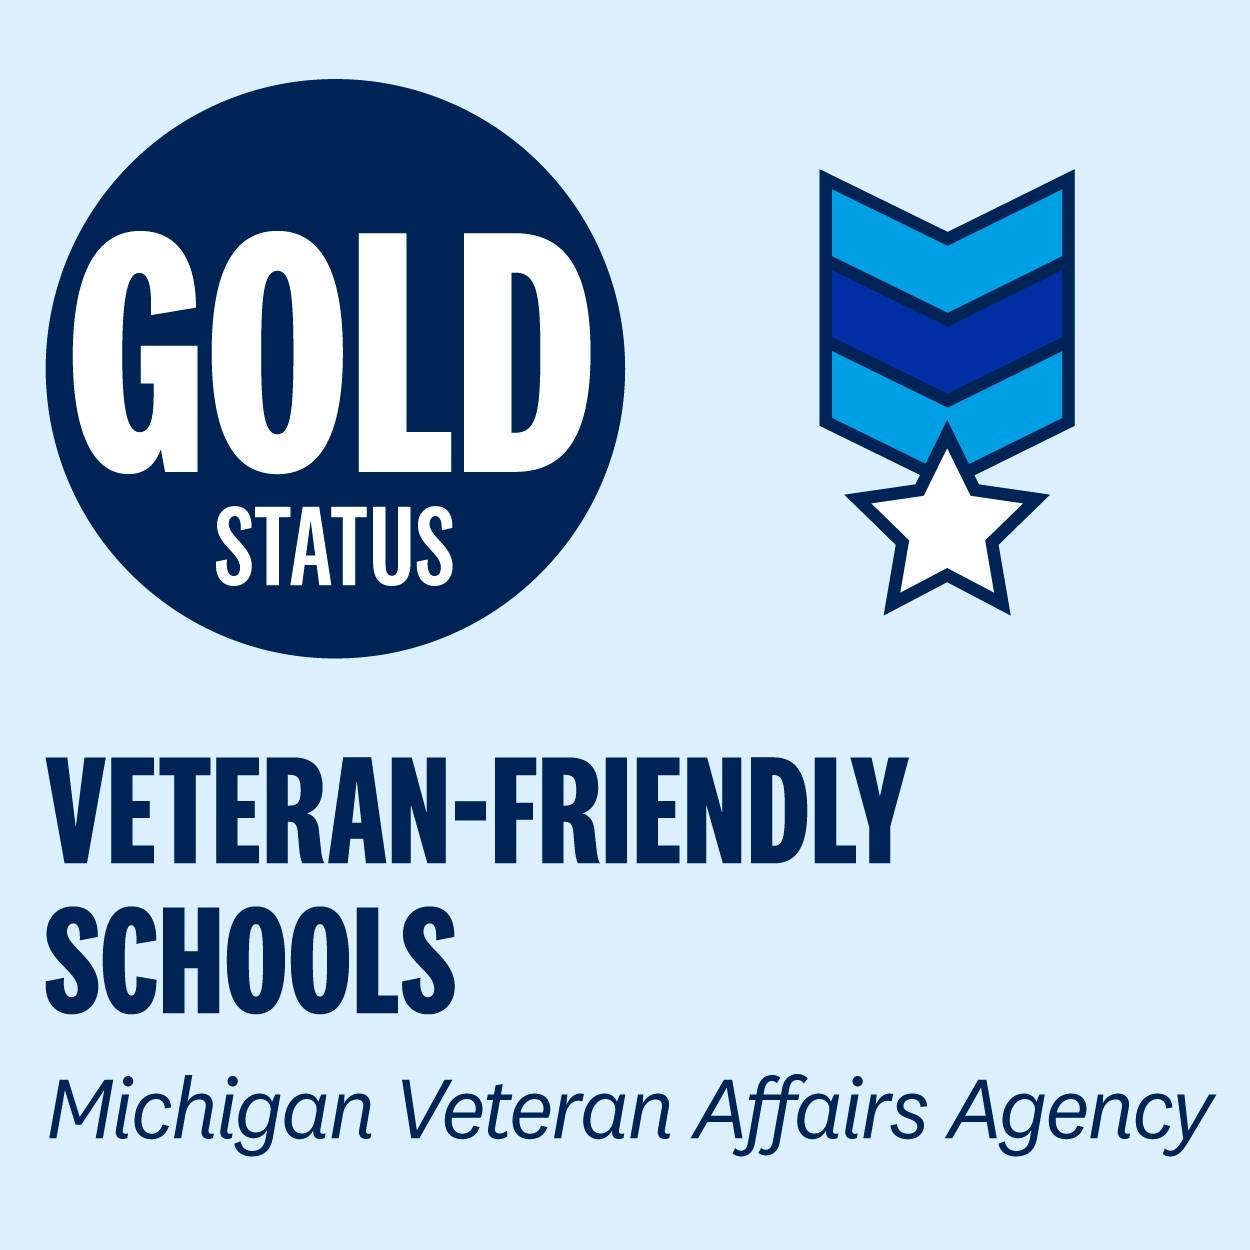 Gold Status, Veteran-Friendly Schools, Michigan Veteran Affairs Agency